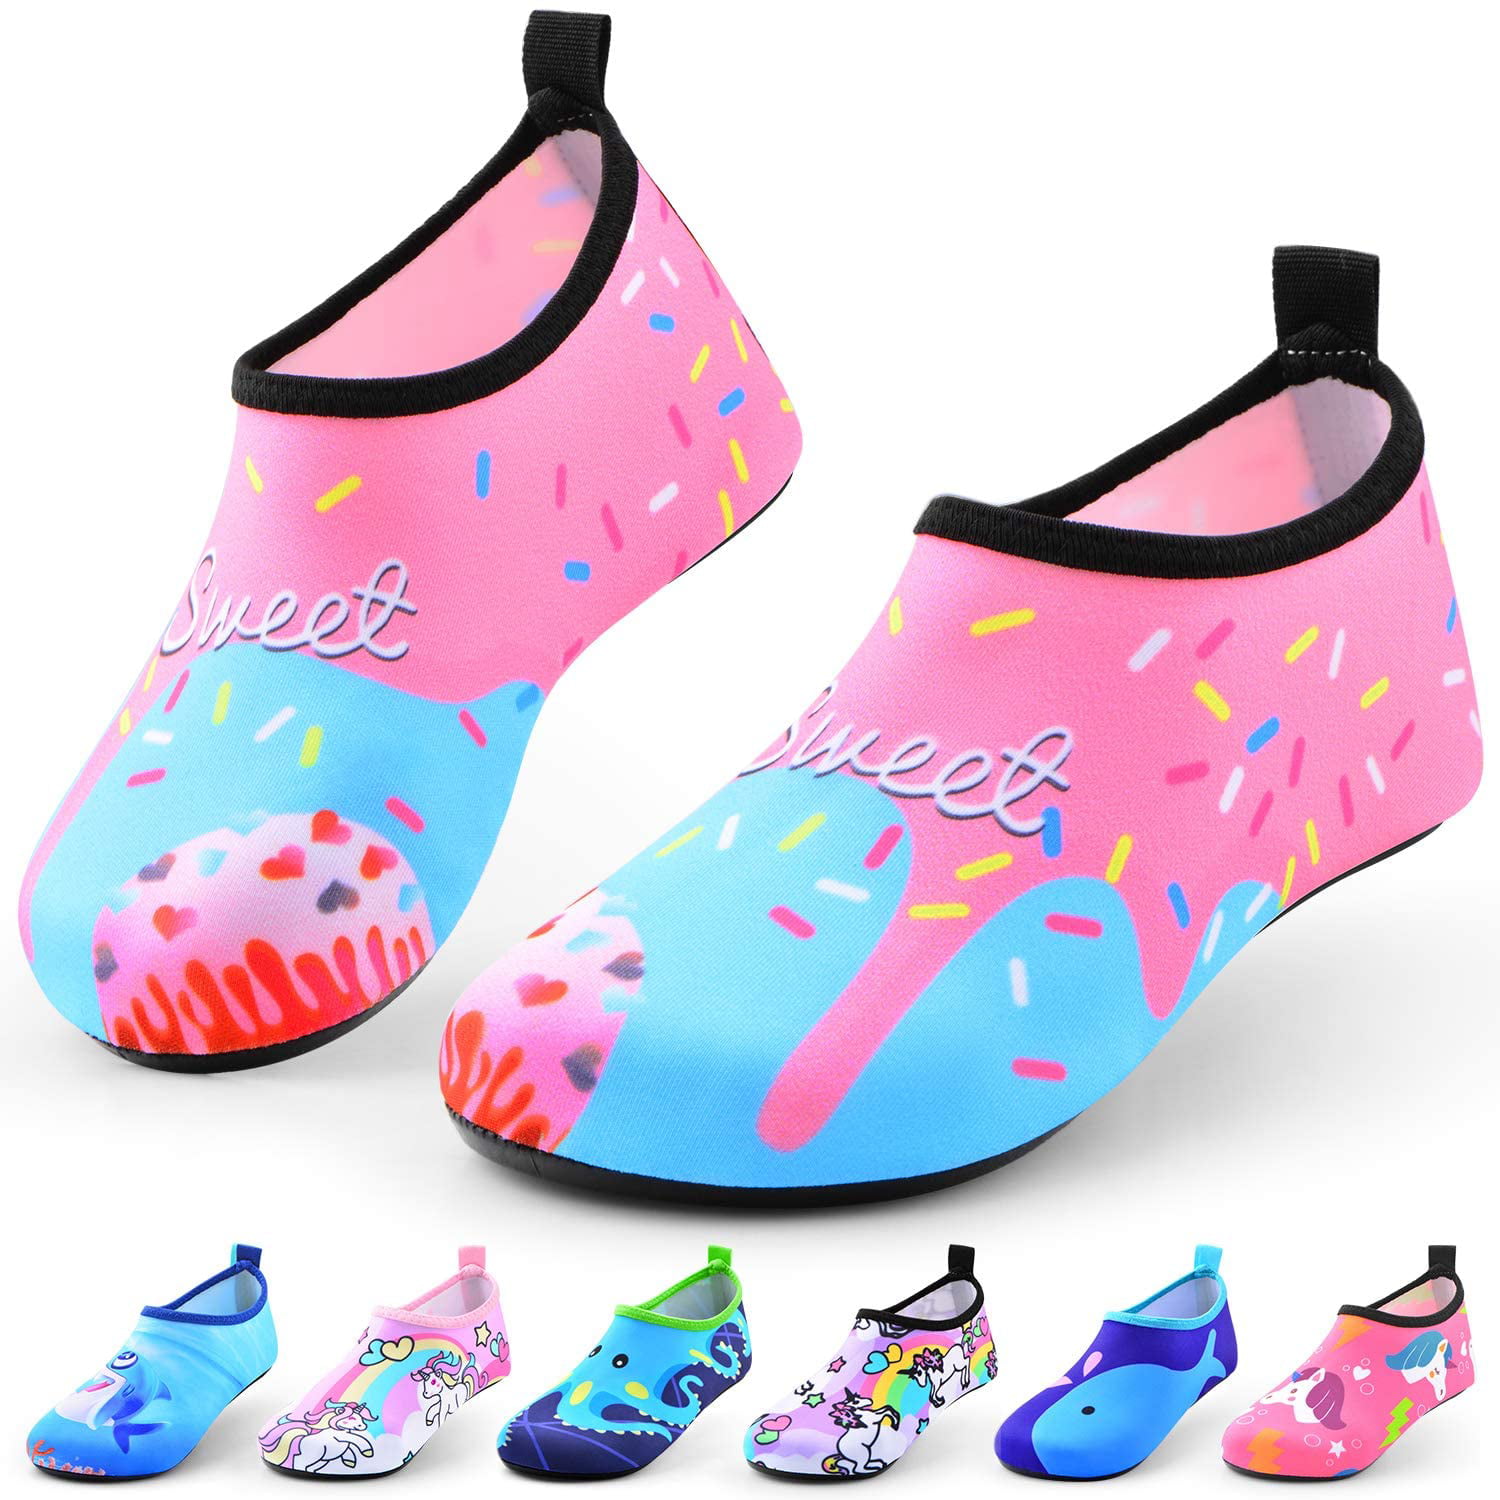 Kids Swim Water Shoes Toddlers Baby Aqua Socks Quick Dry Pool Beach Barefoot for Boys Girls Children 